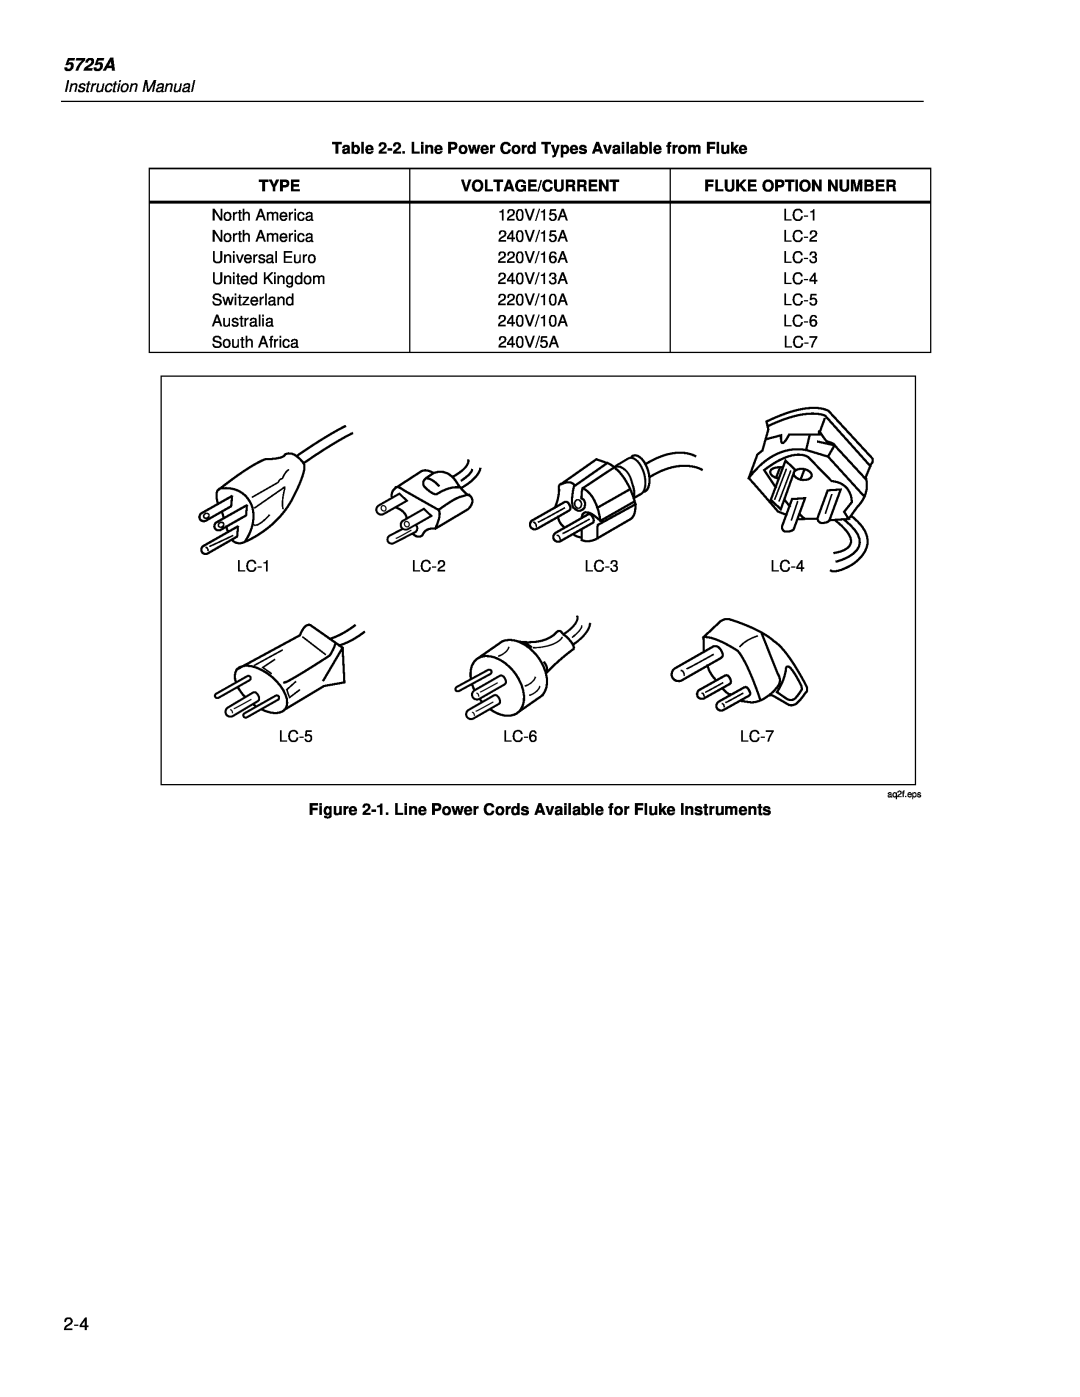 Fluke 5725A instruction manual Instruction Manual, Type, Voltage/Current, Fluke Option Number 